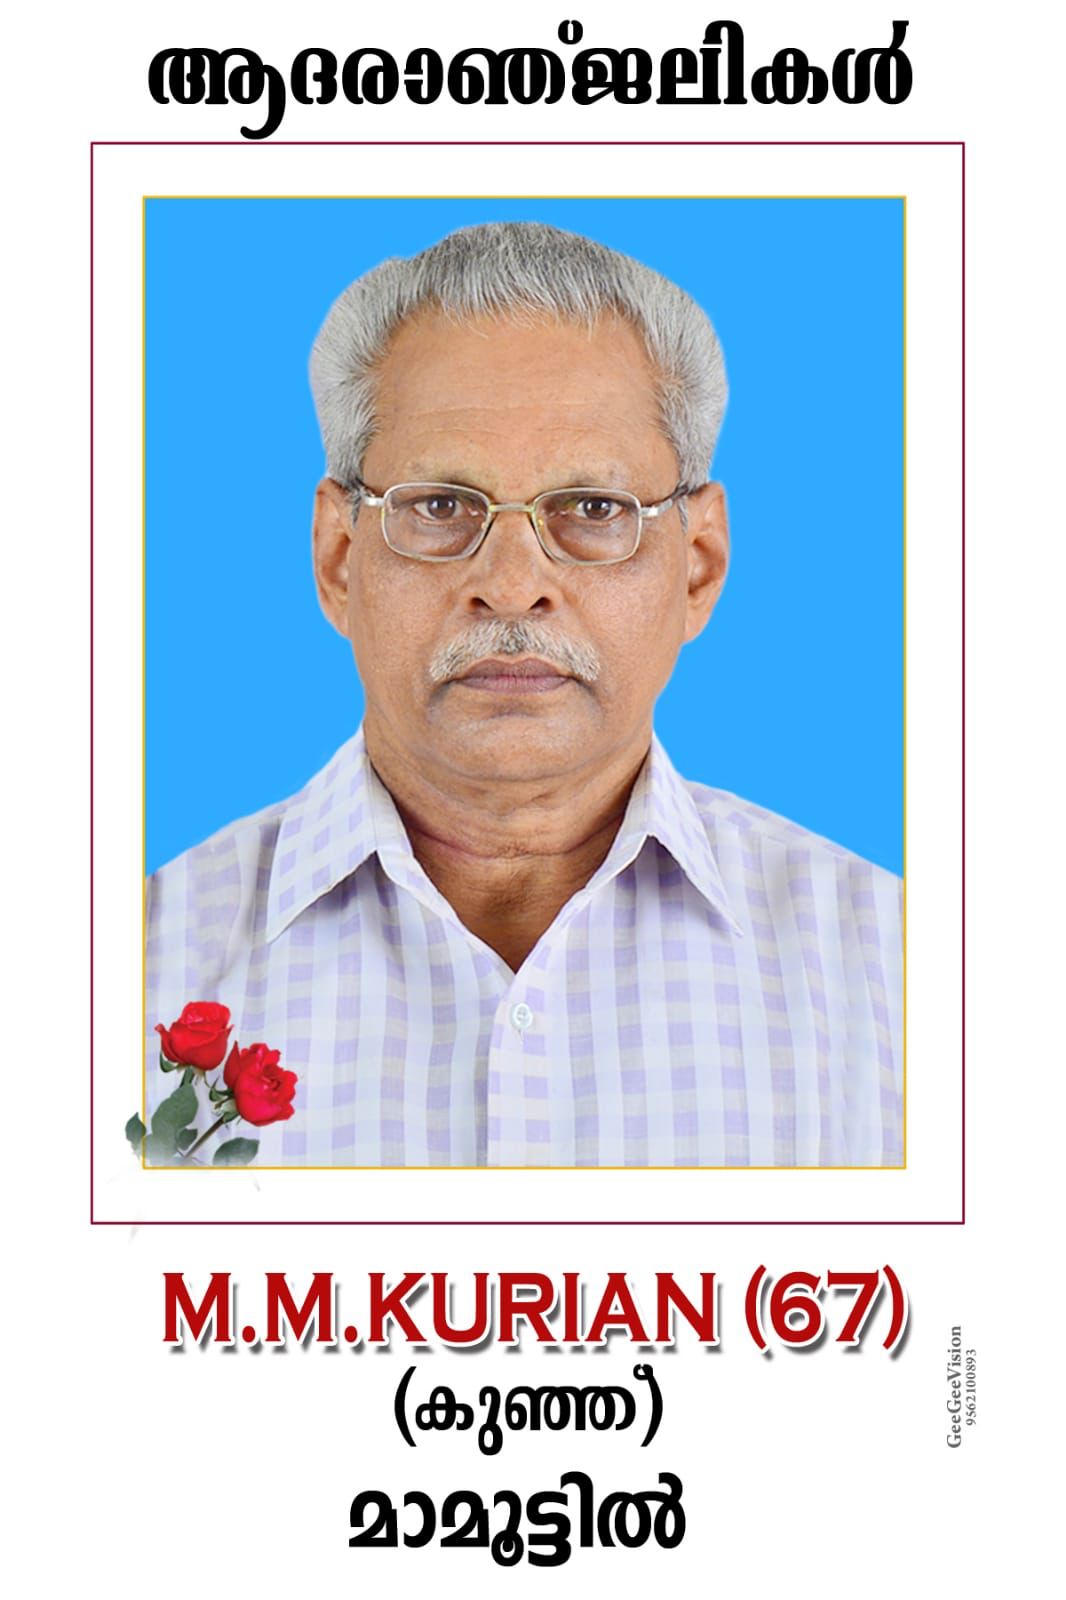 OBITUARY- MR. M. M. KURIAN (67 Years)